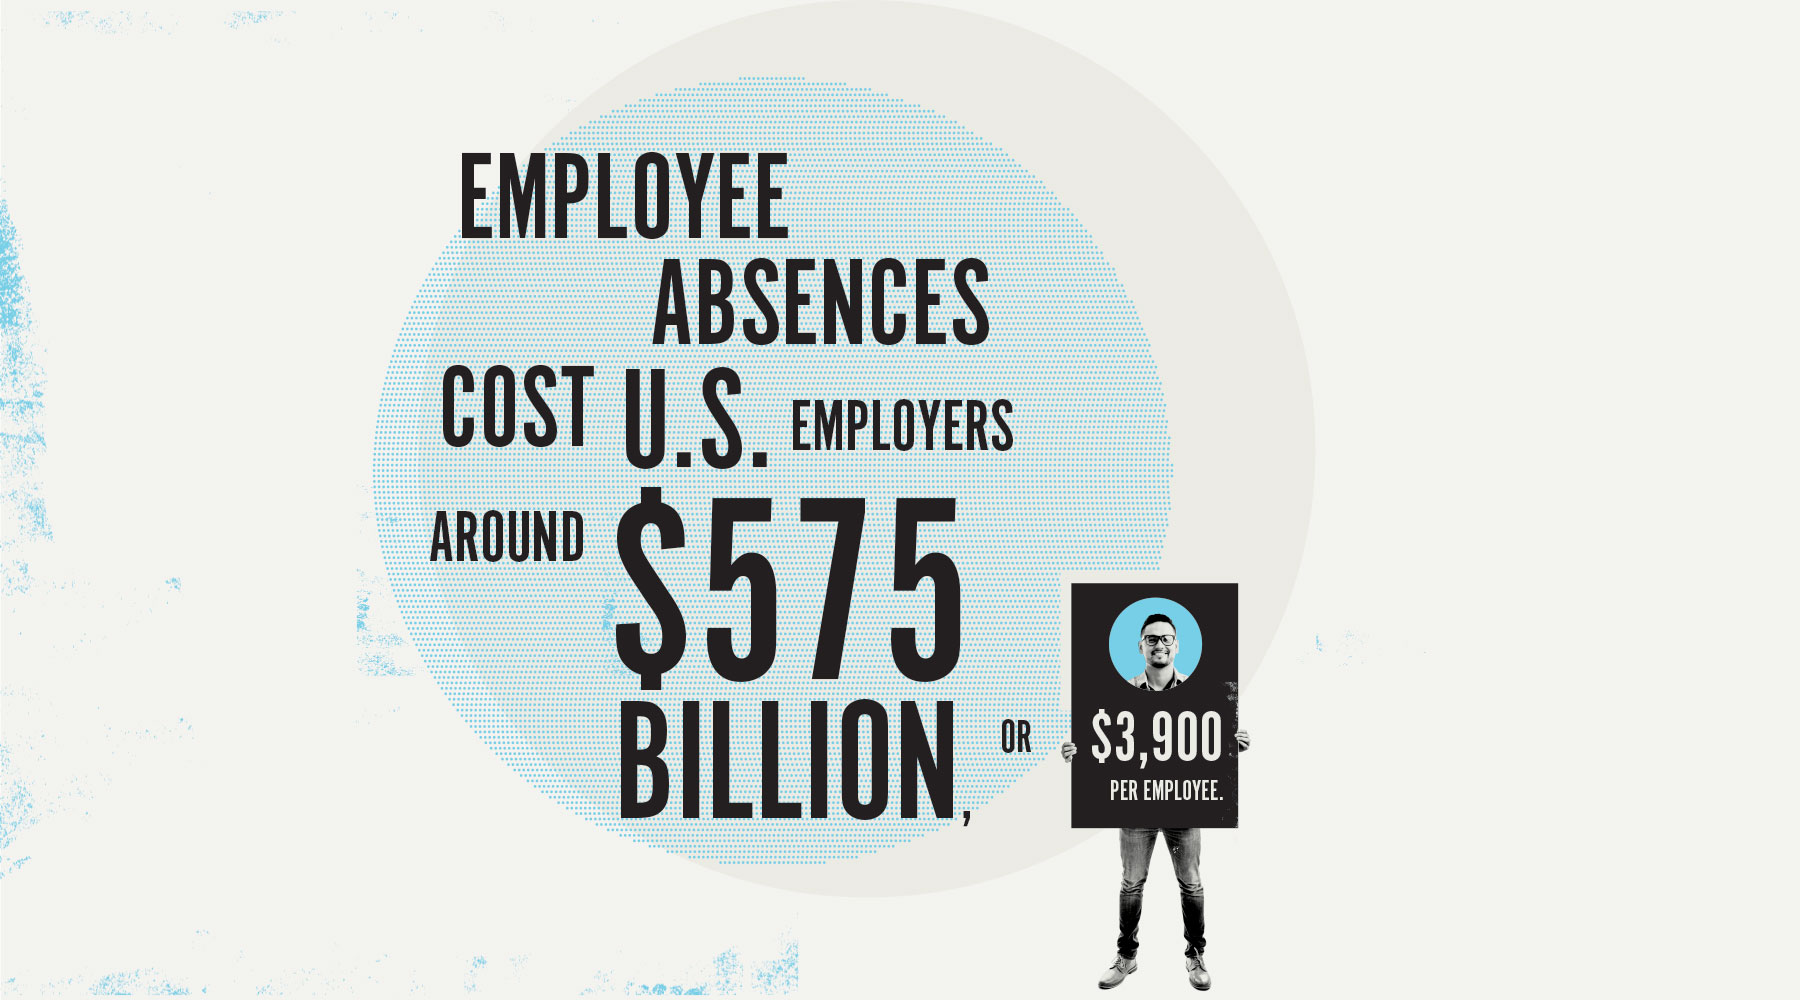 employee absences cost U.S. employers around $575 billion, or $3,900 per employee